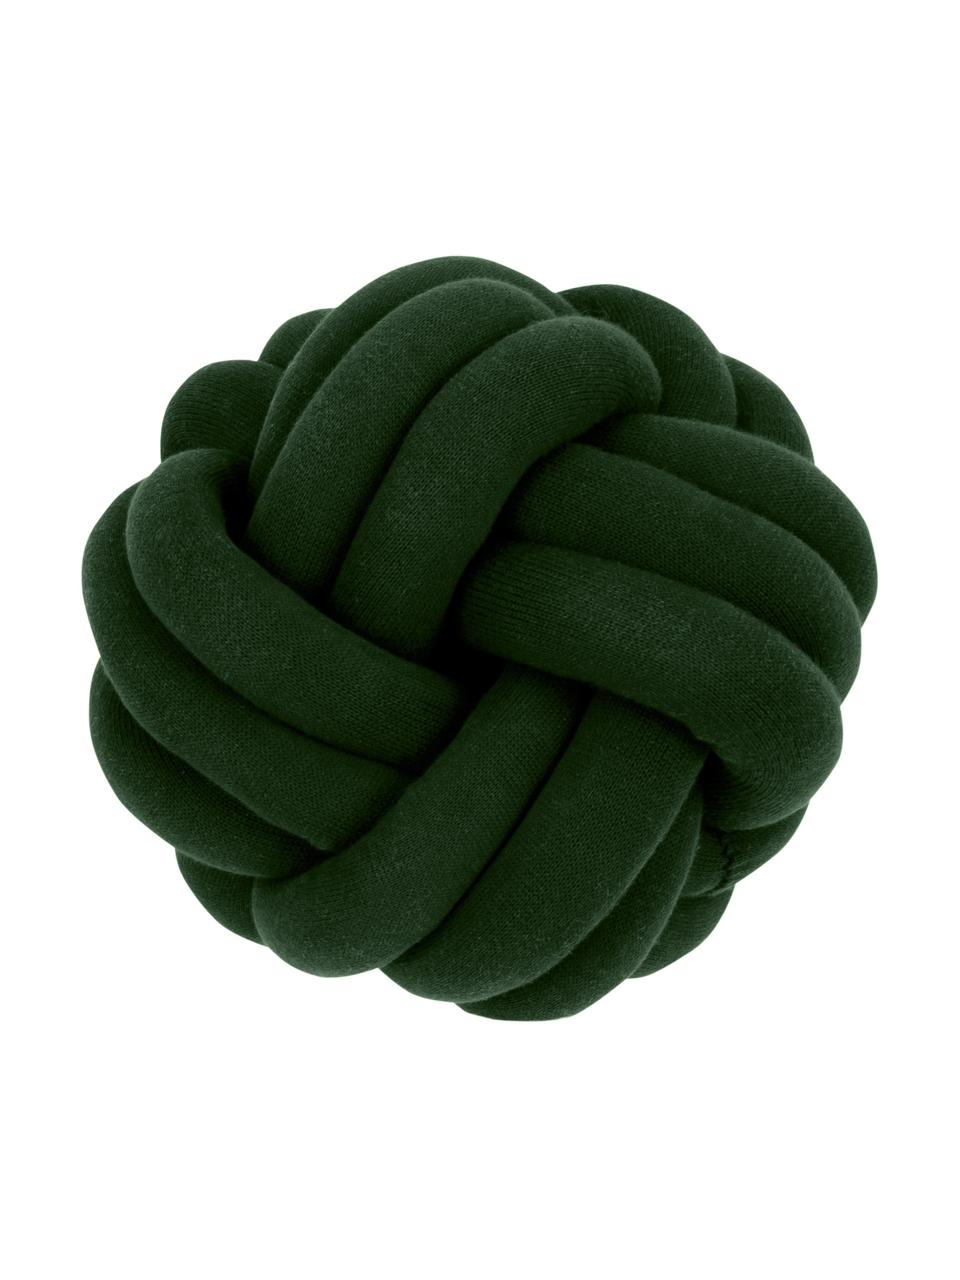 Cuscino verde scuro Twist, Verde scuro, Ø 30 cm